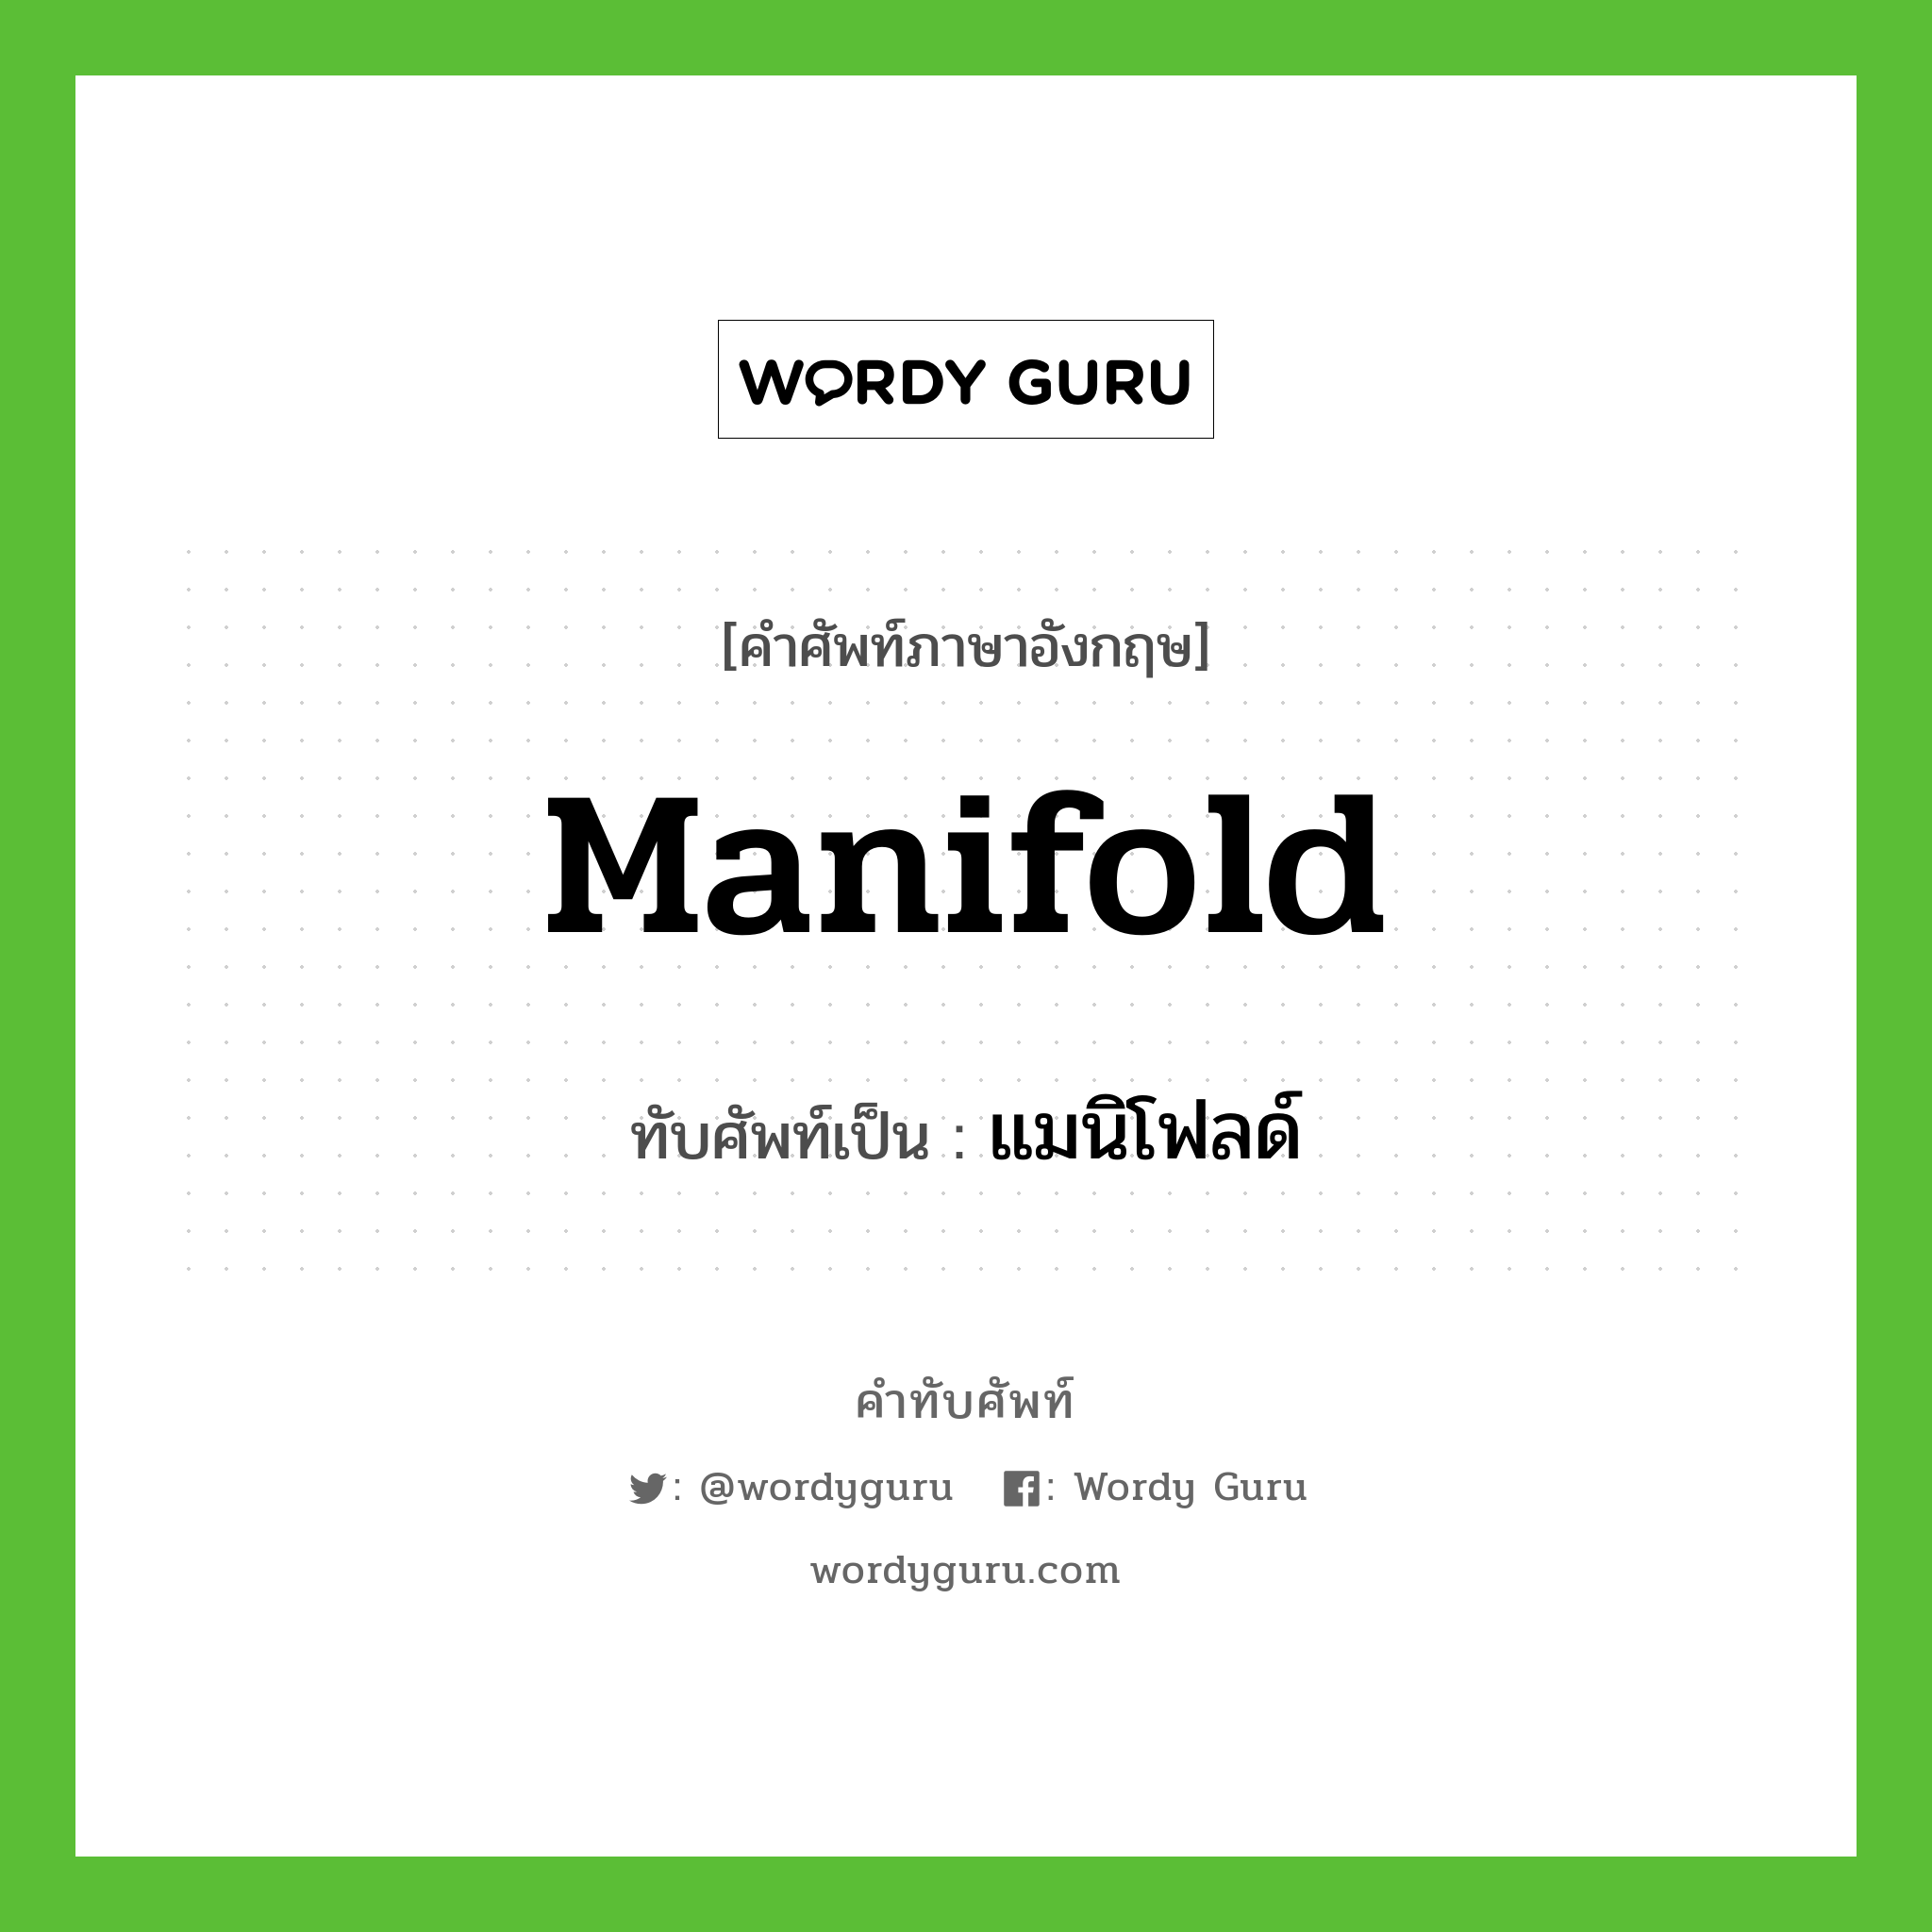 manifold เขียนเป็นคำไทยว่าอะไร?, คำศัพท์ภาษาอังกฤษ manifold ทับศัพท์เป็น แมนิโฟลด์